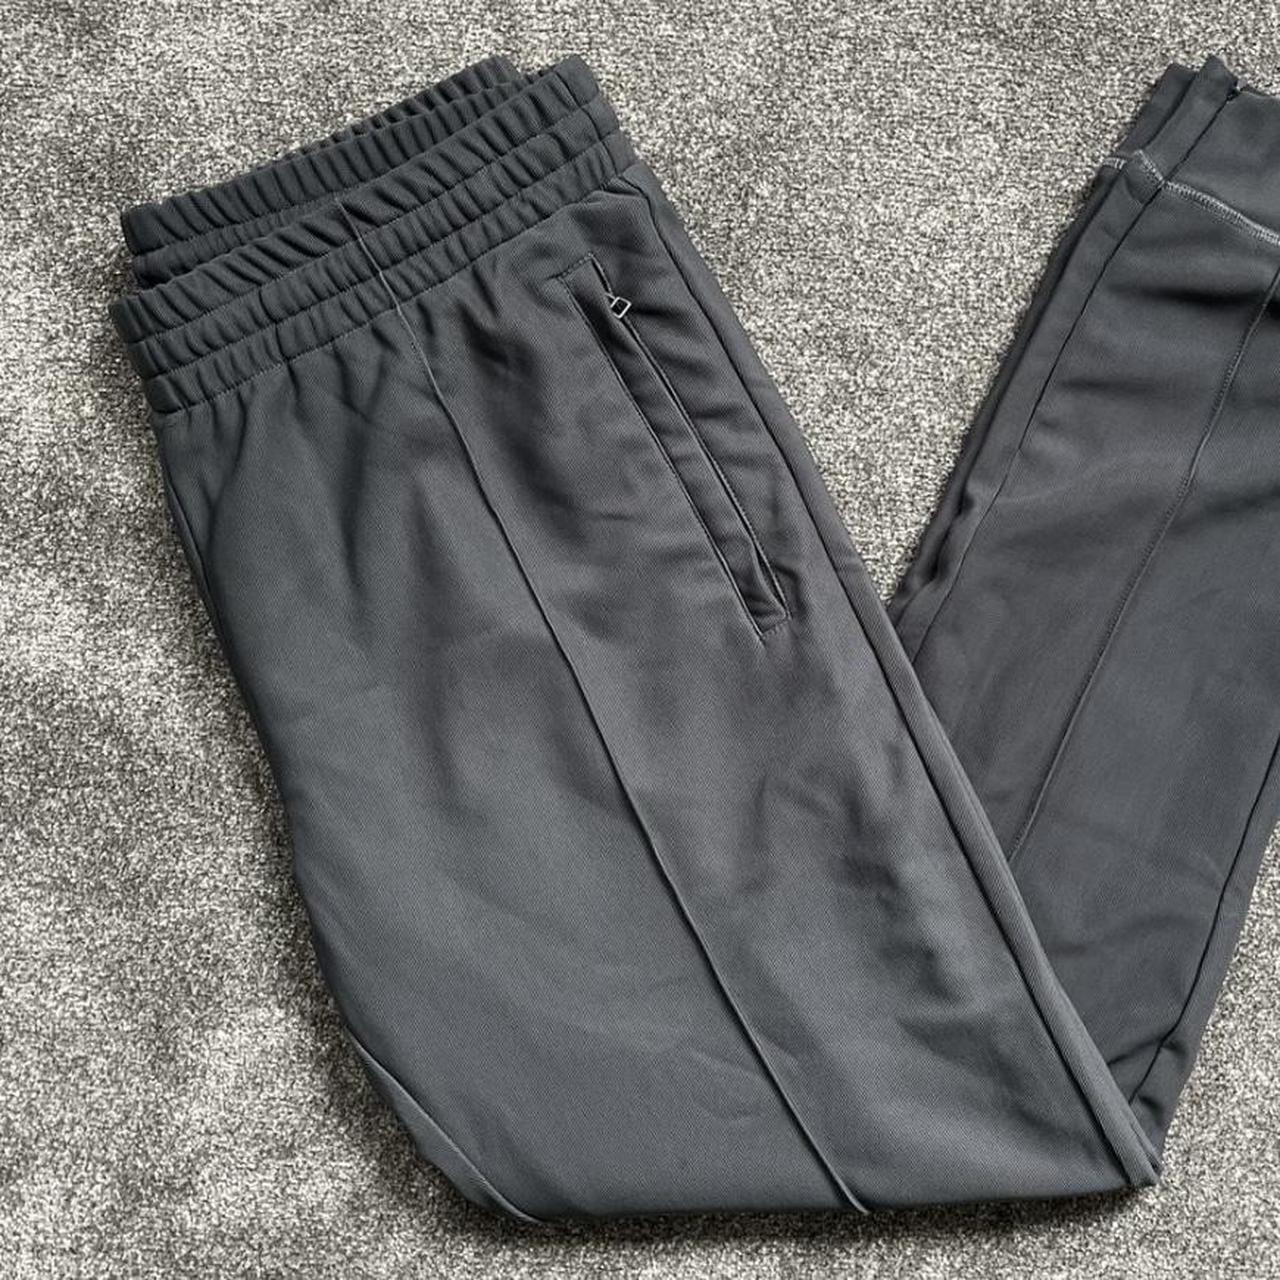 Arne Grey Joggers with zip pocket #Grey #Designer... - Depop